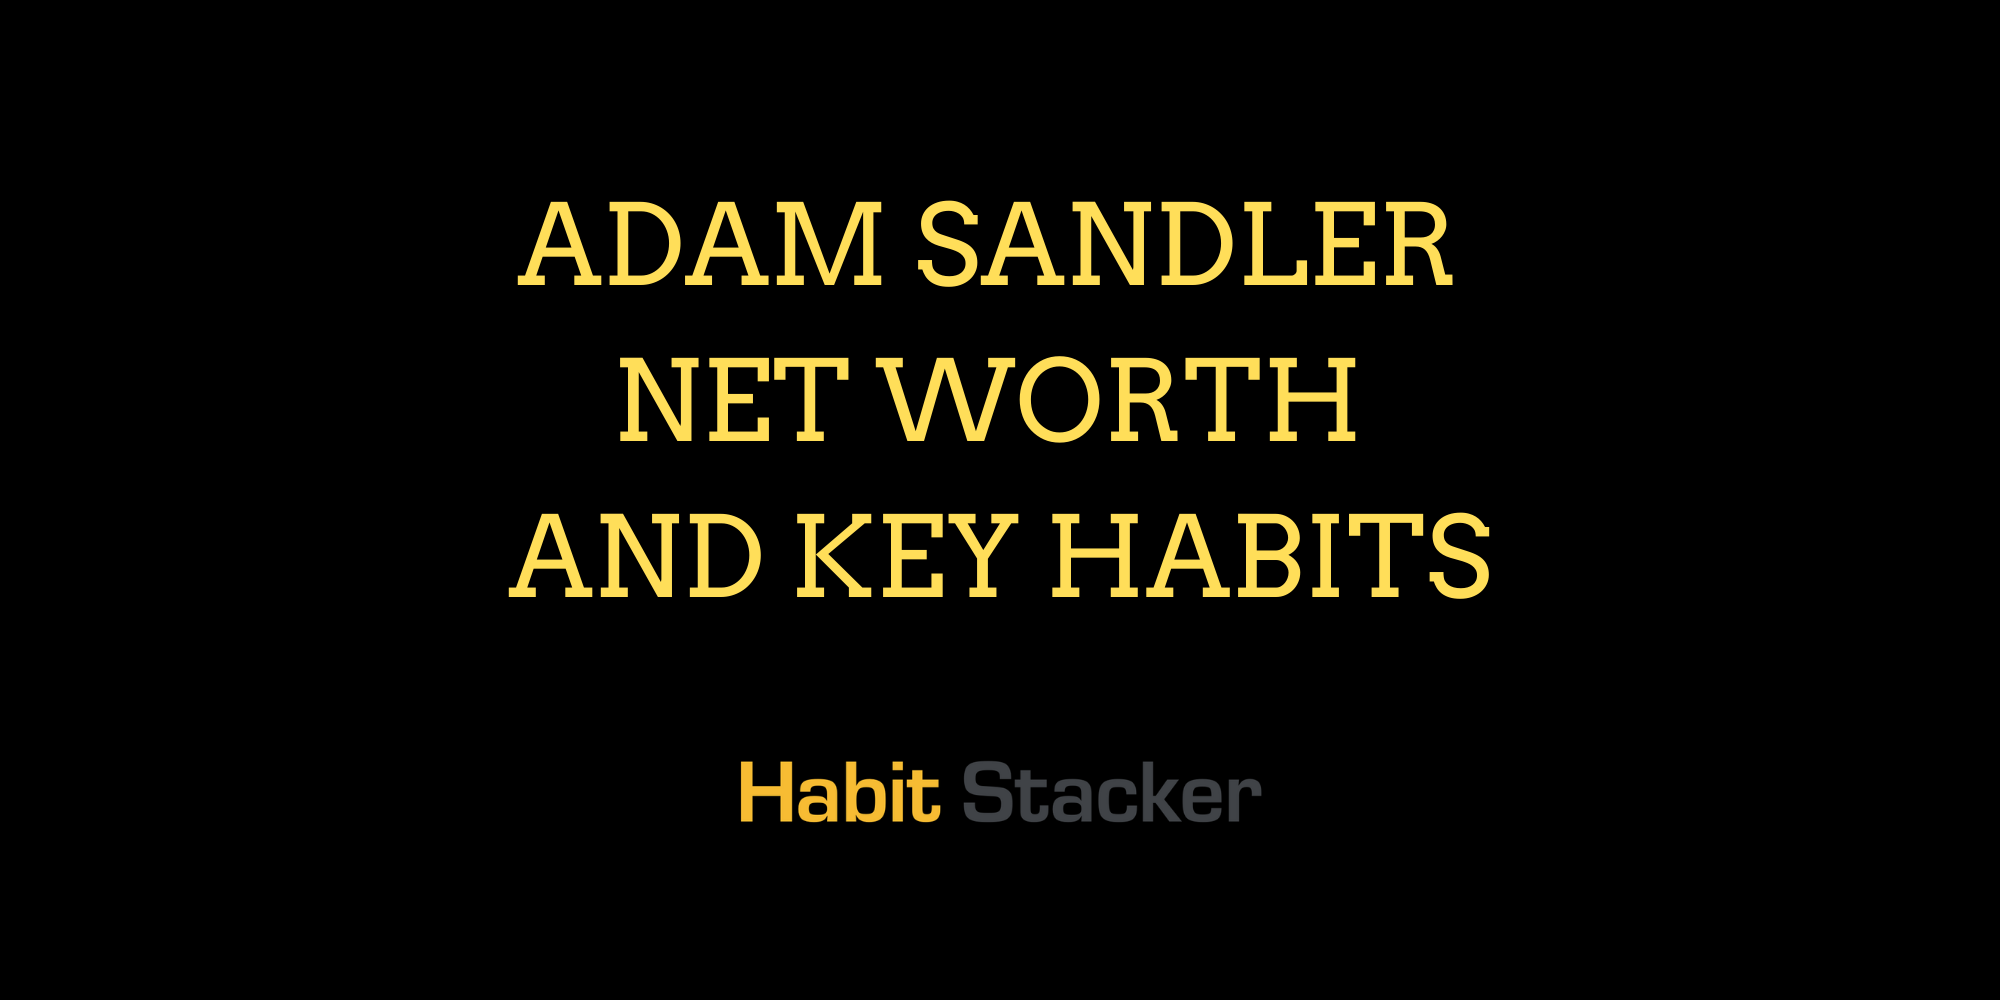 Adam Sandler Net Worth and Key Habits